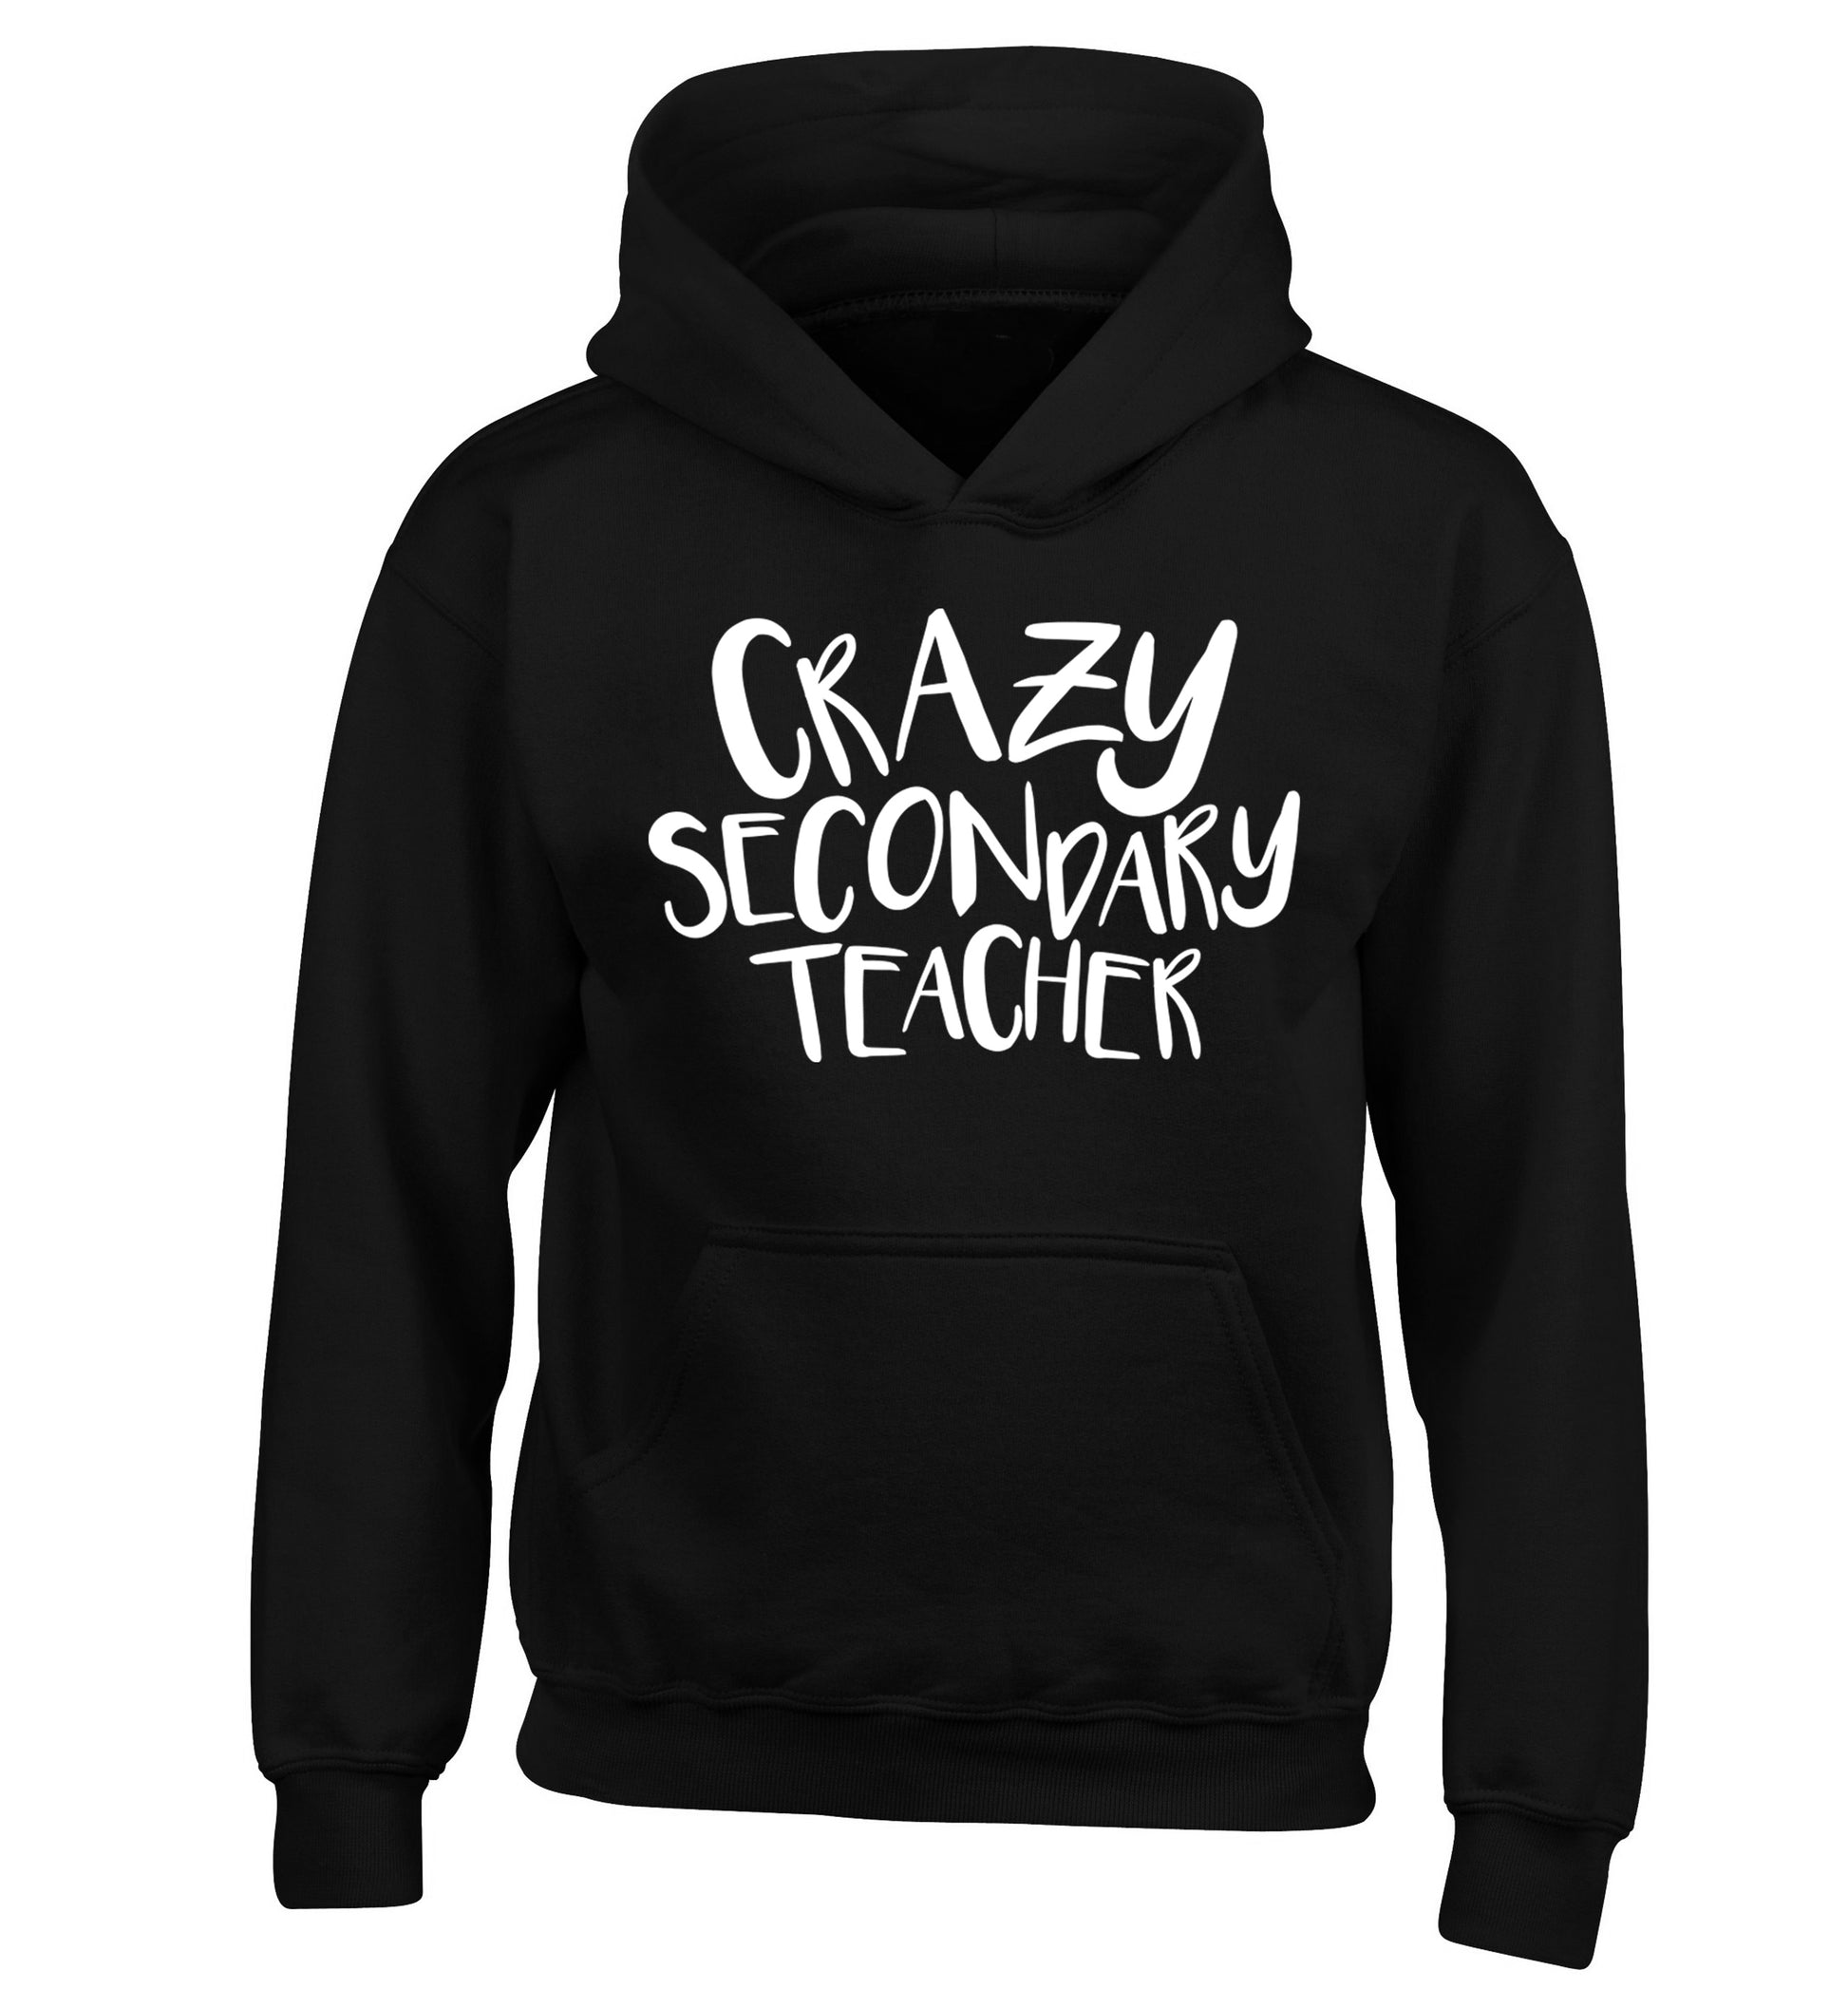 Crazy secondary teacher children's black hoodie 12-13 Years